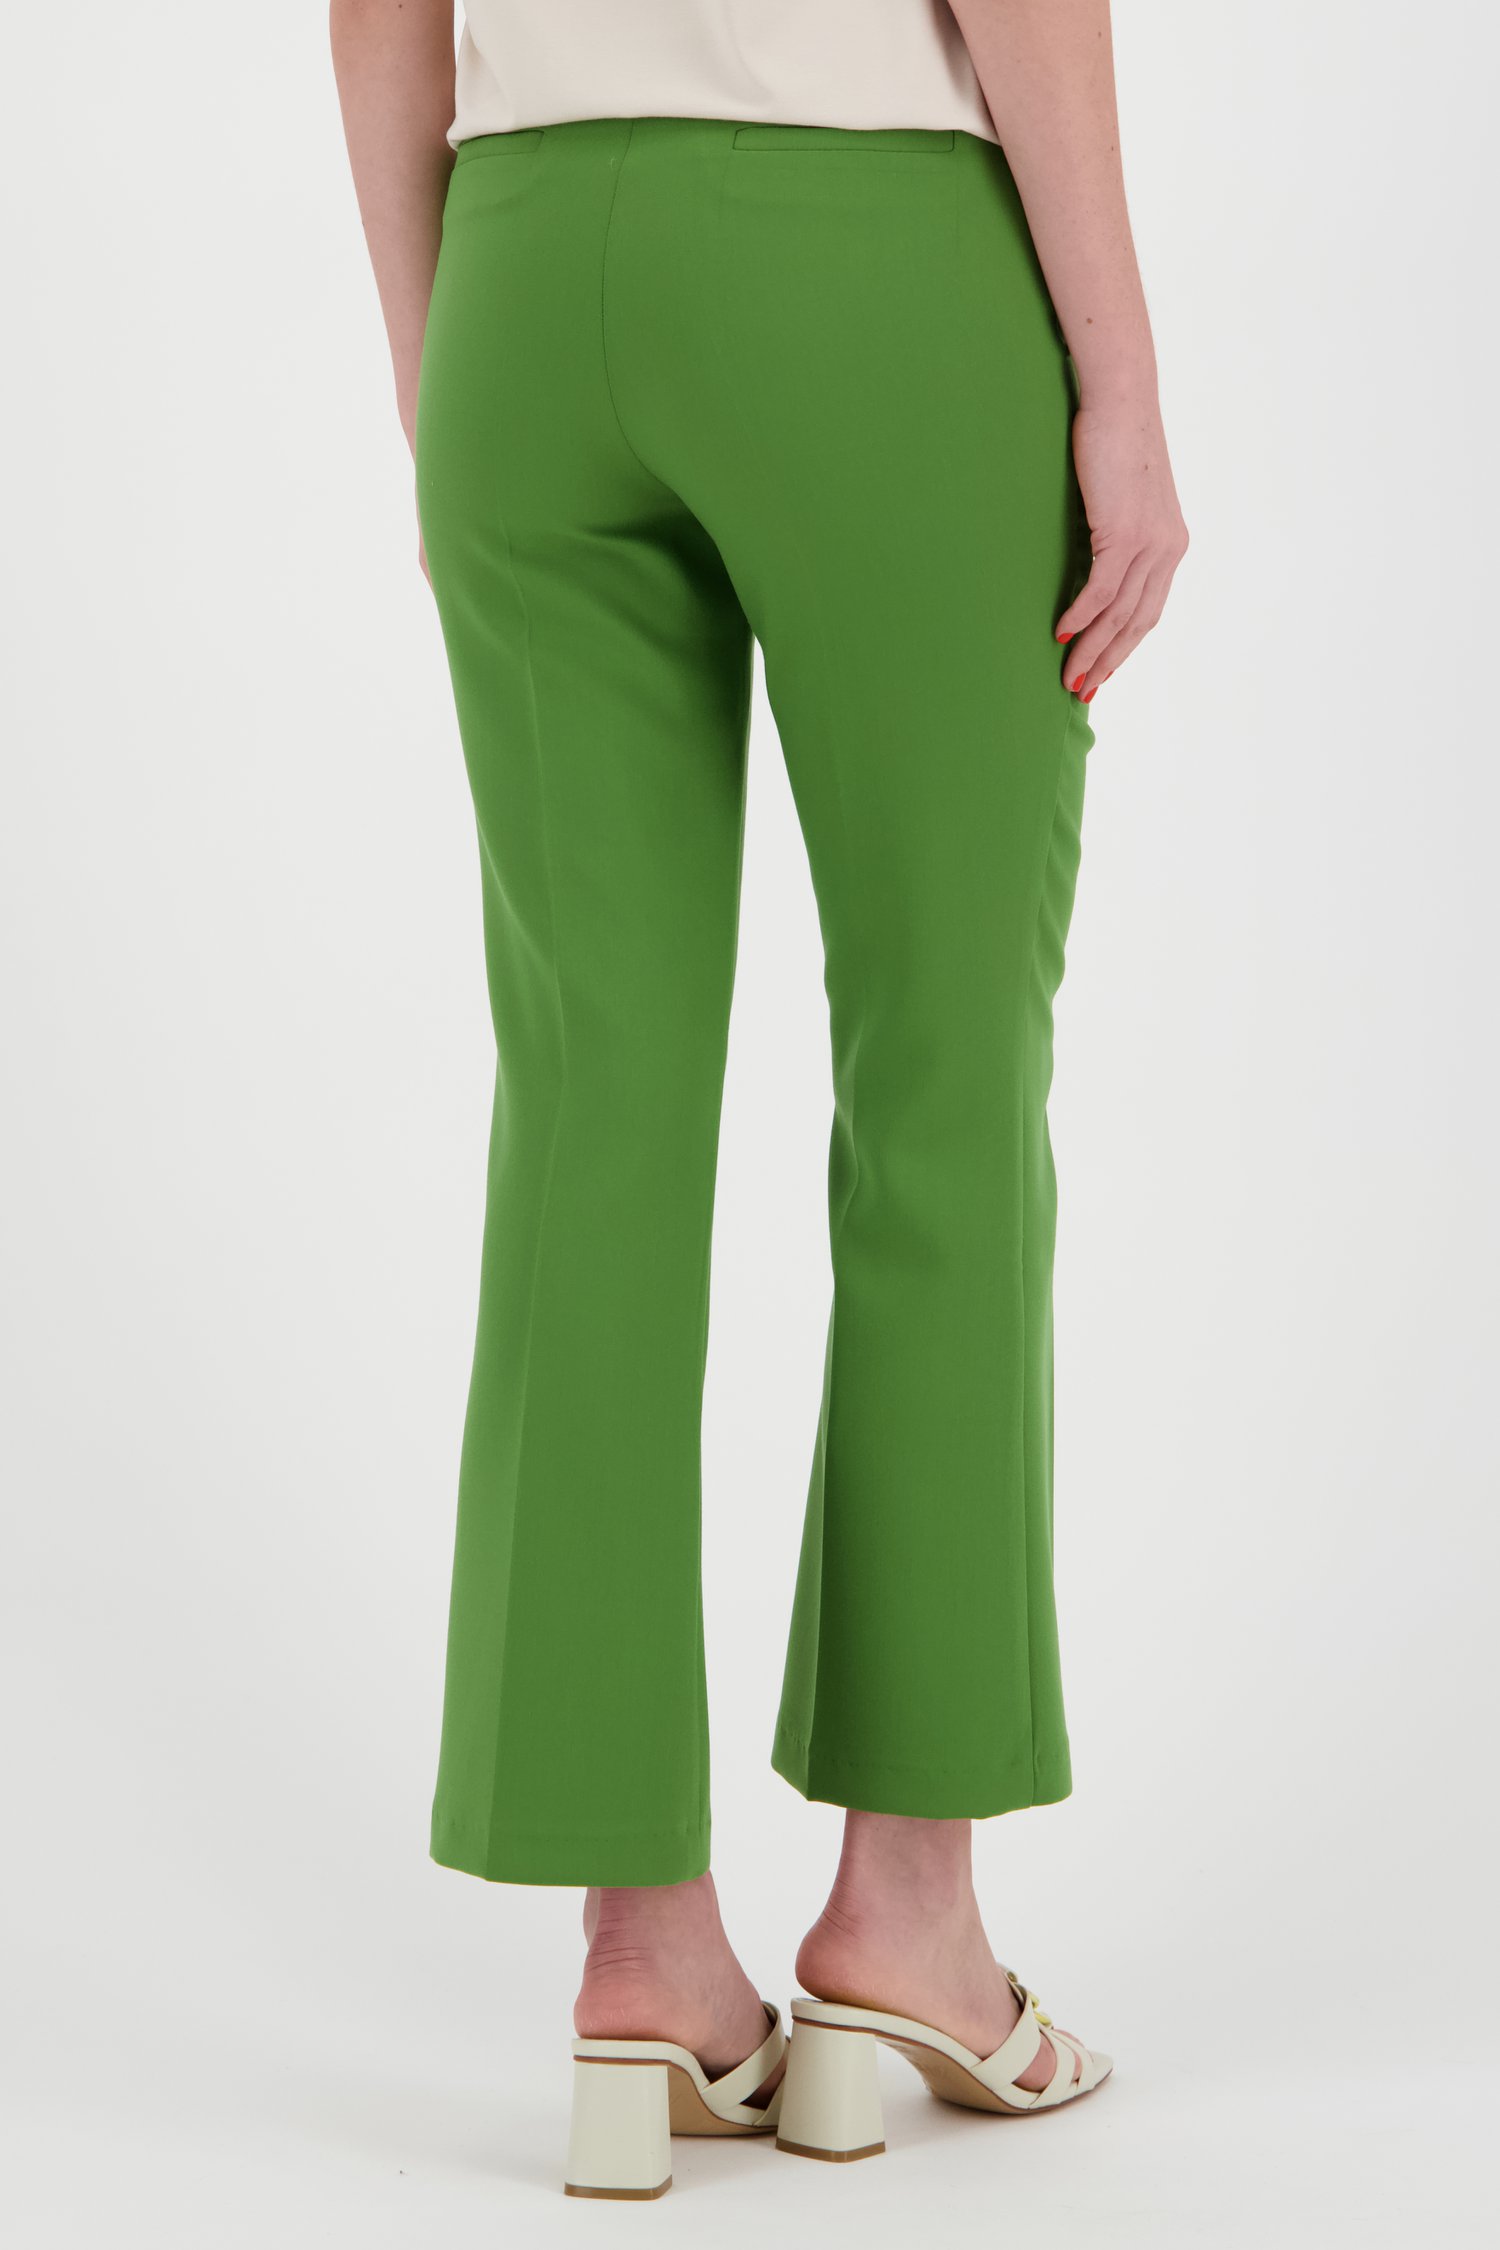 Groene geklede broek  van More & More voor Dames